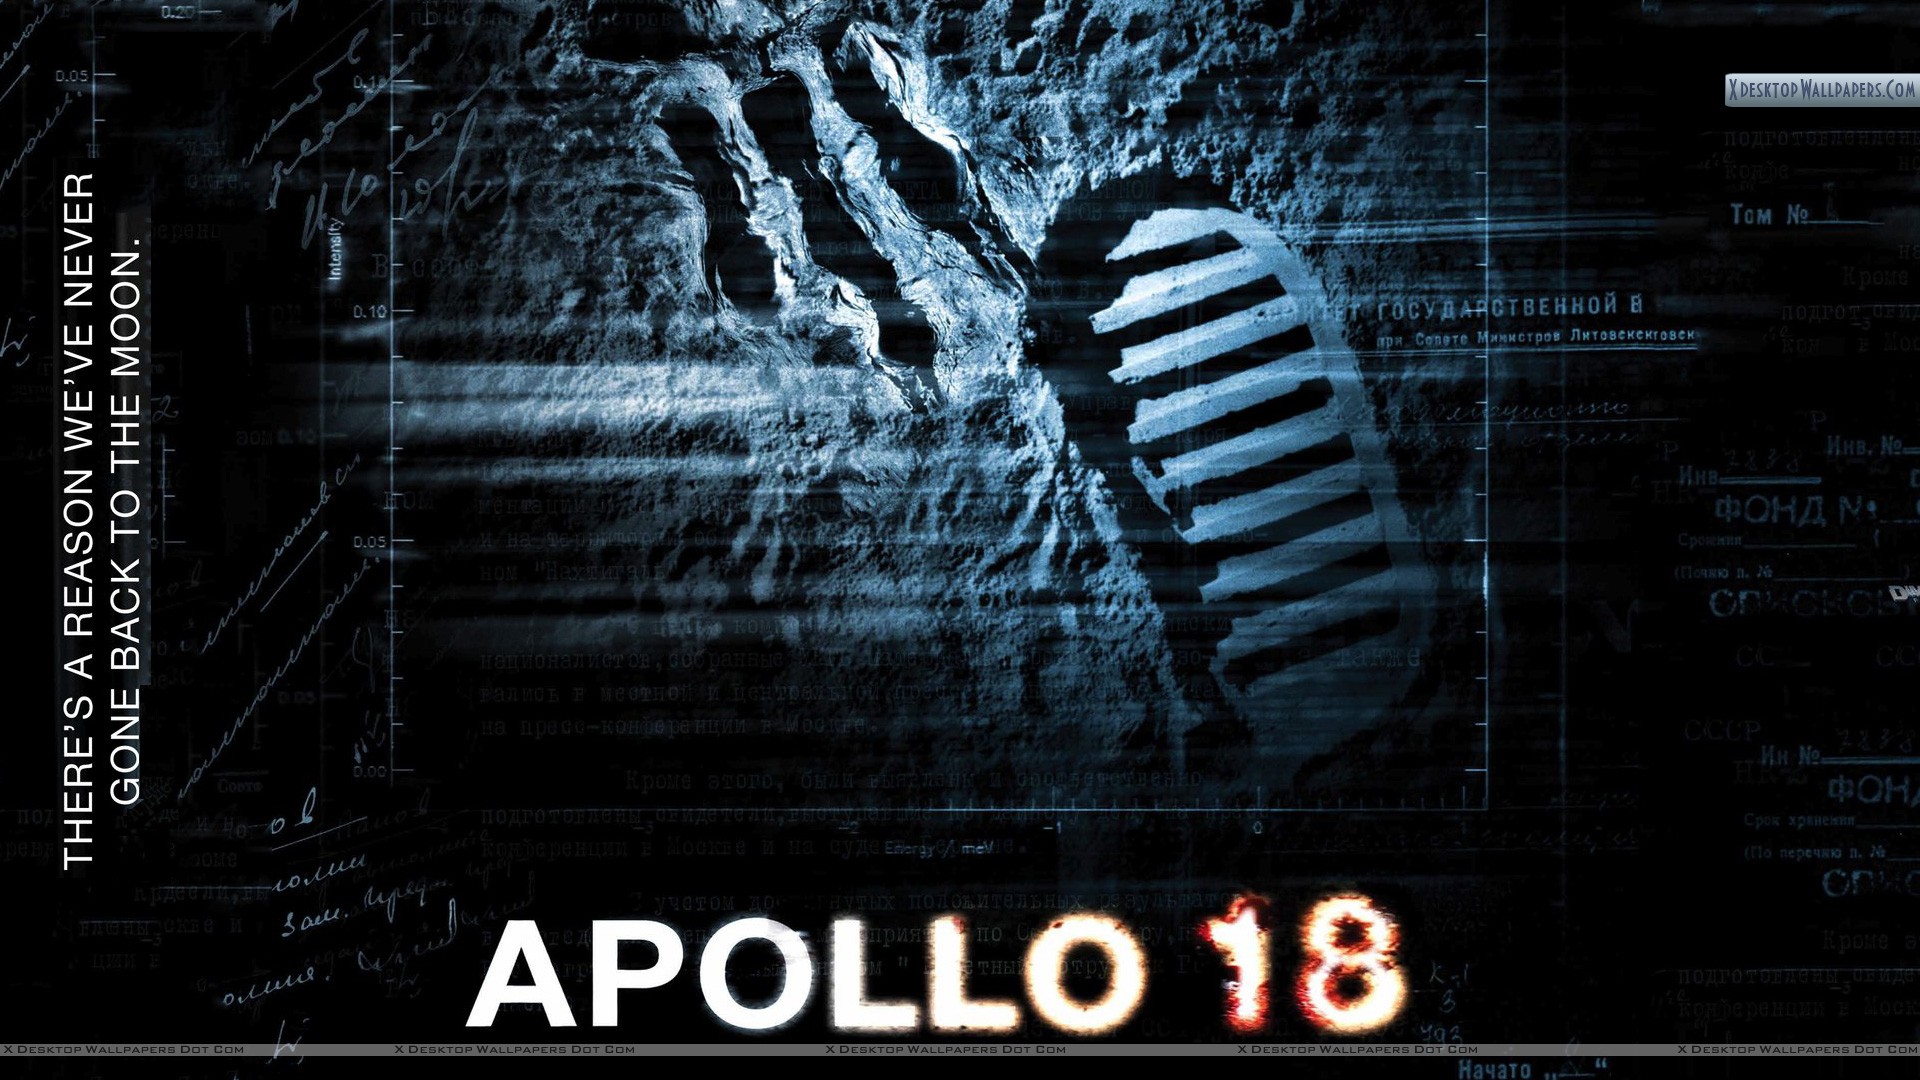 Apollo 18 HD wallpapers, Desktop wallpaper - most viewed